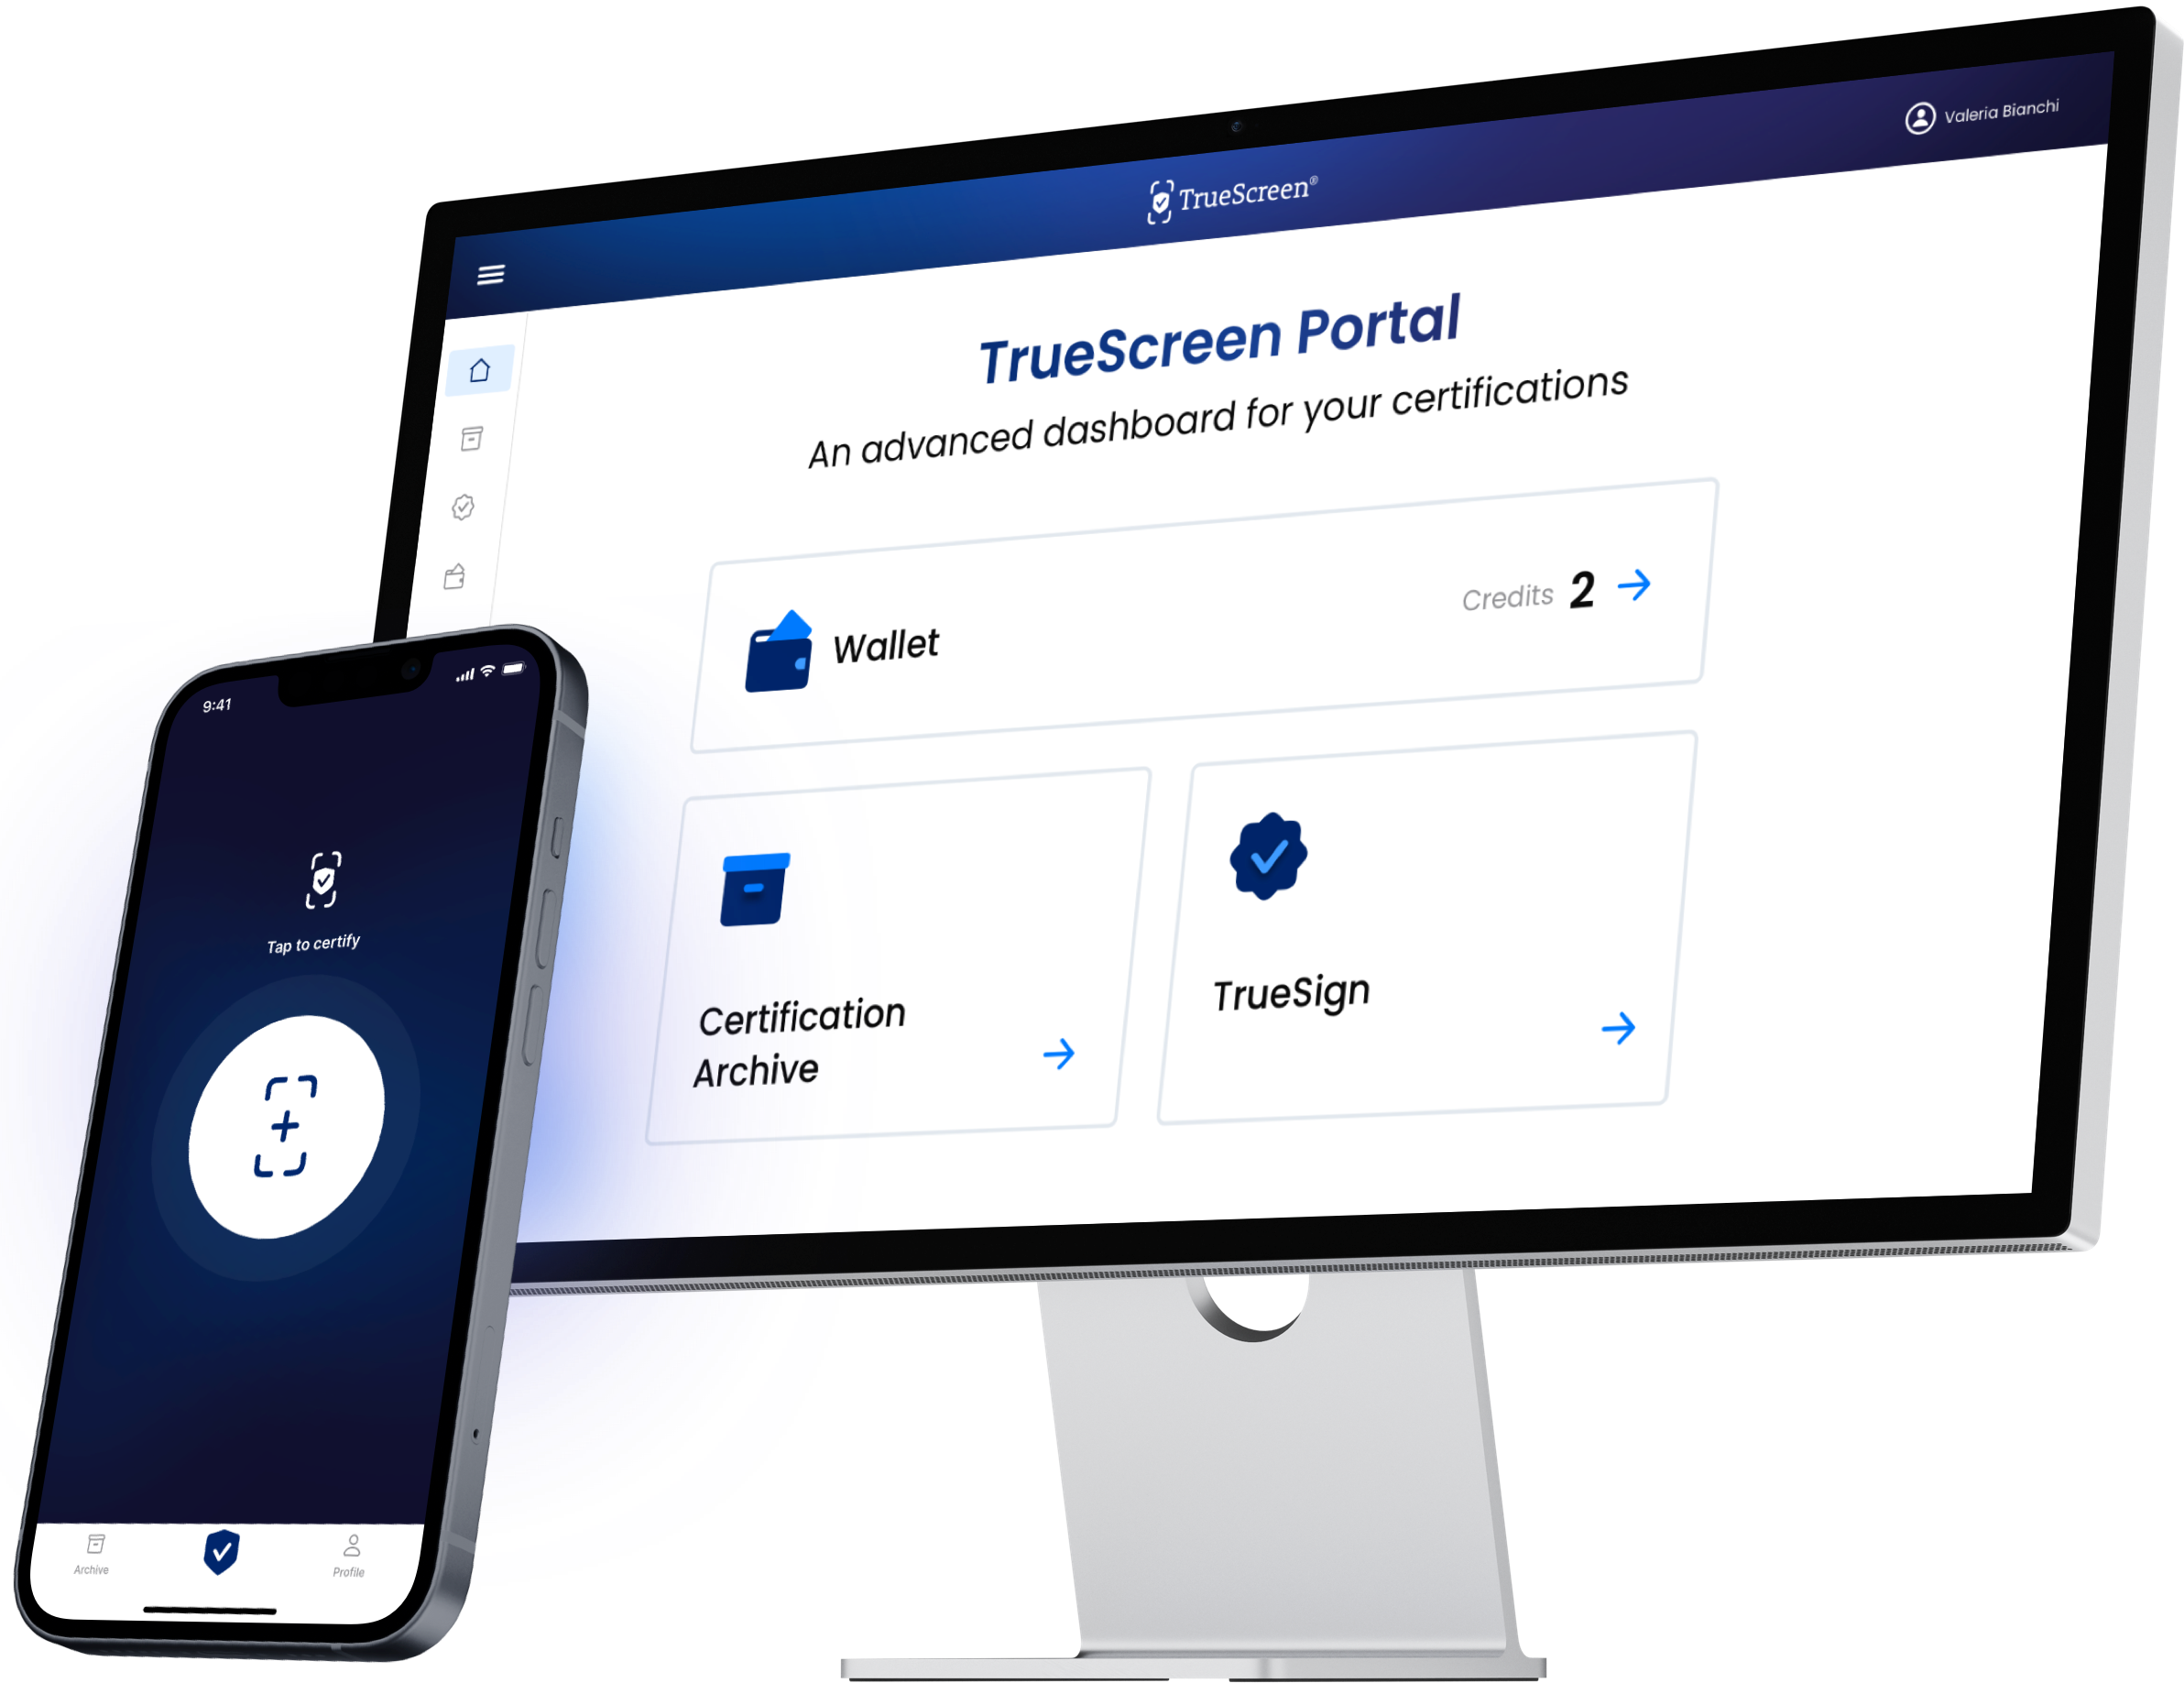 TrueScreen Portal homepage and TrueScreen App home